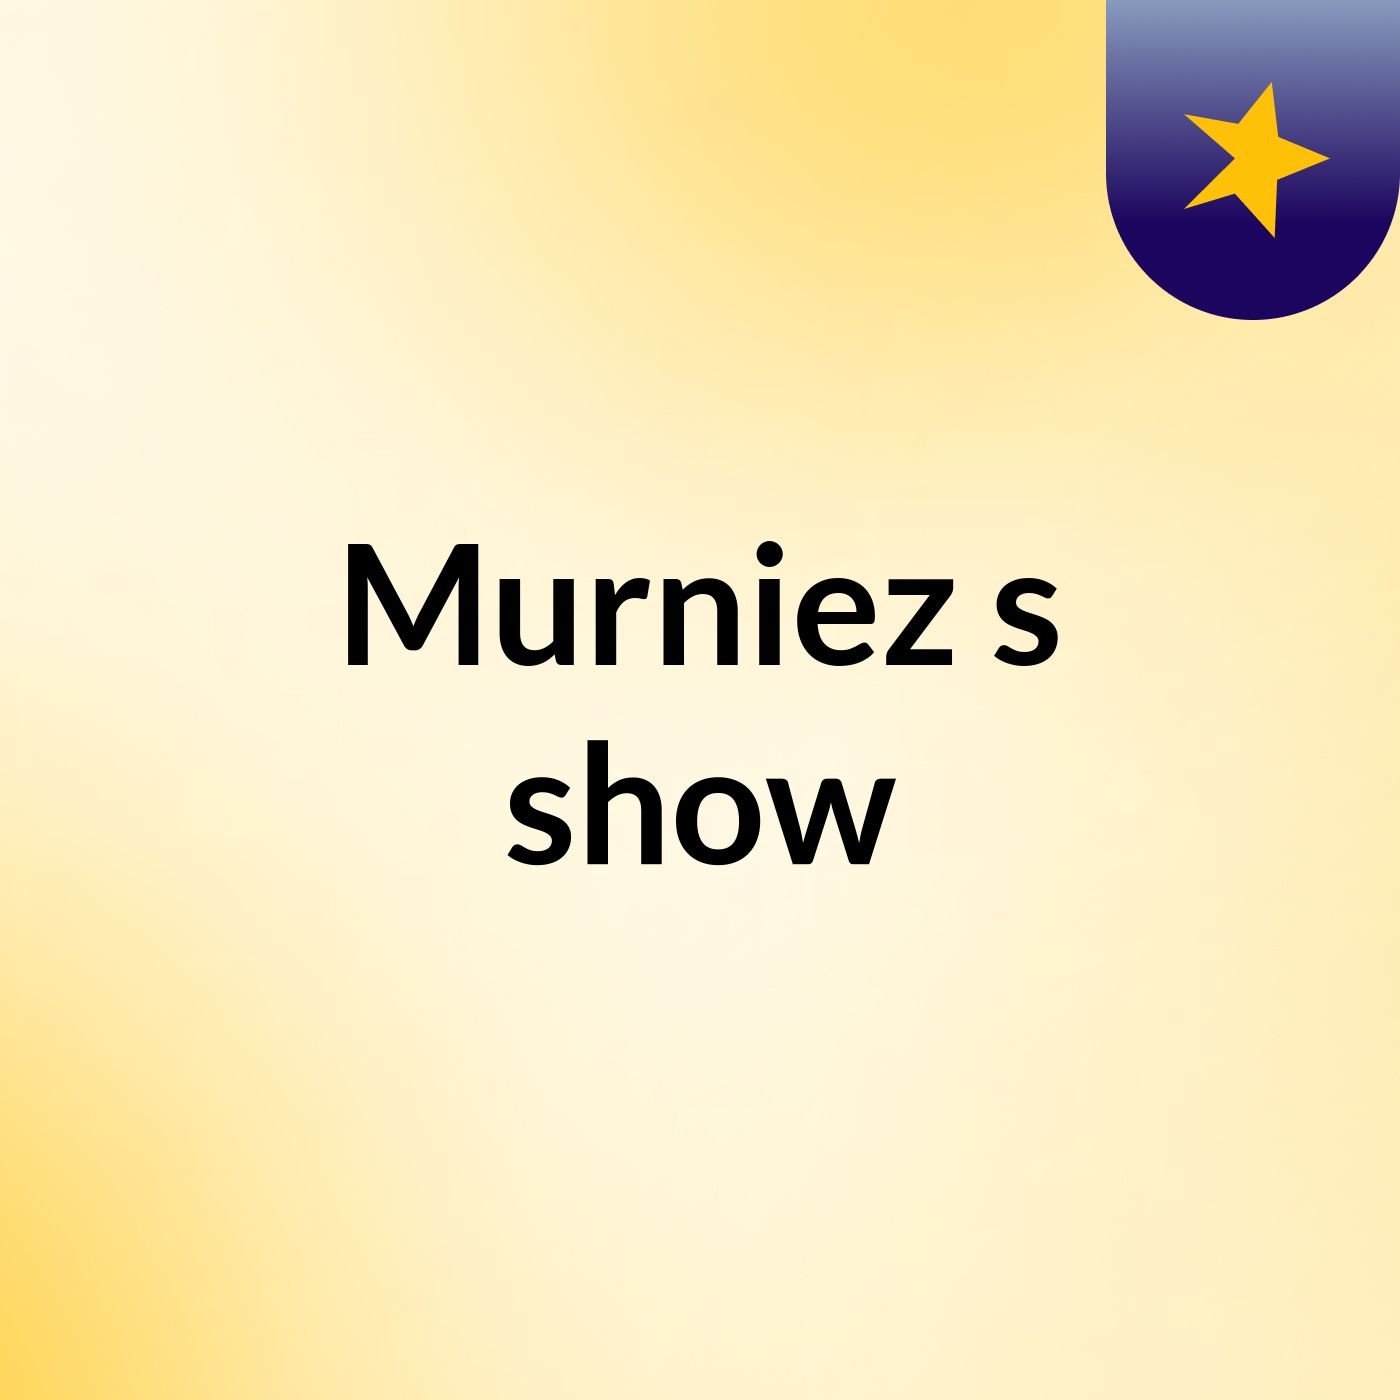 Murniez's show